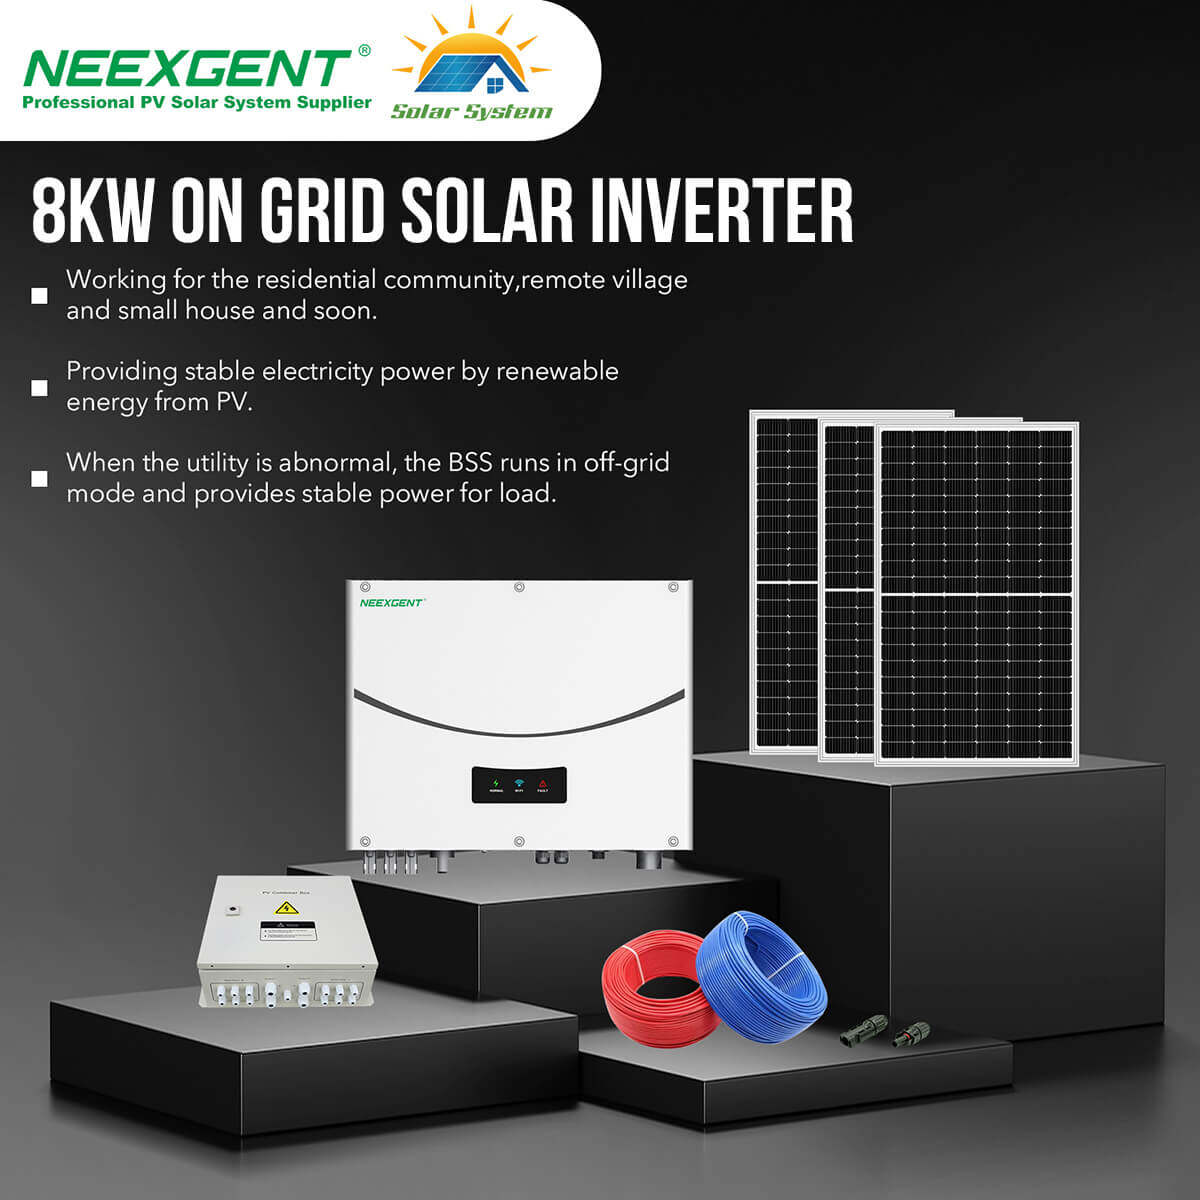 8kw on grid solar inverter